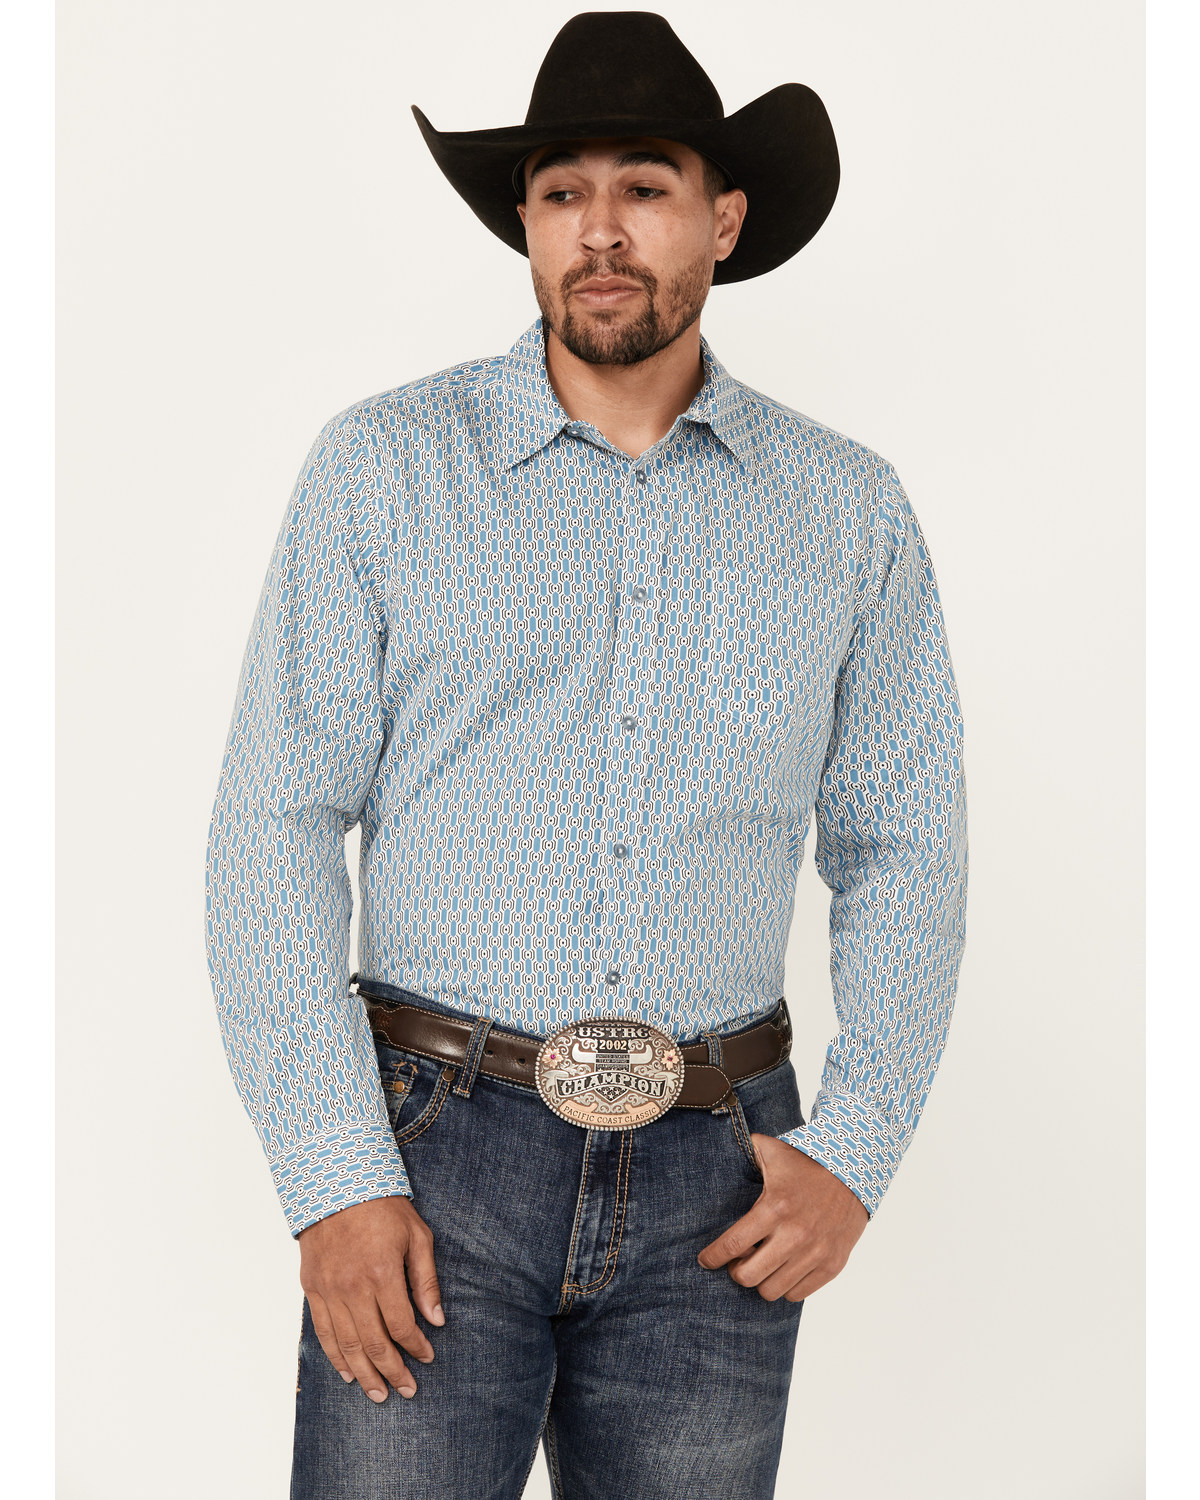 Gibson Trading Co Men's Bullseye Geo Print Long Sleeve Button-Down Western Shirt